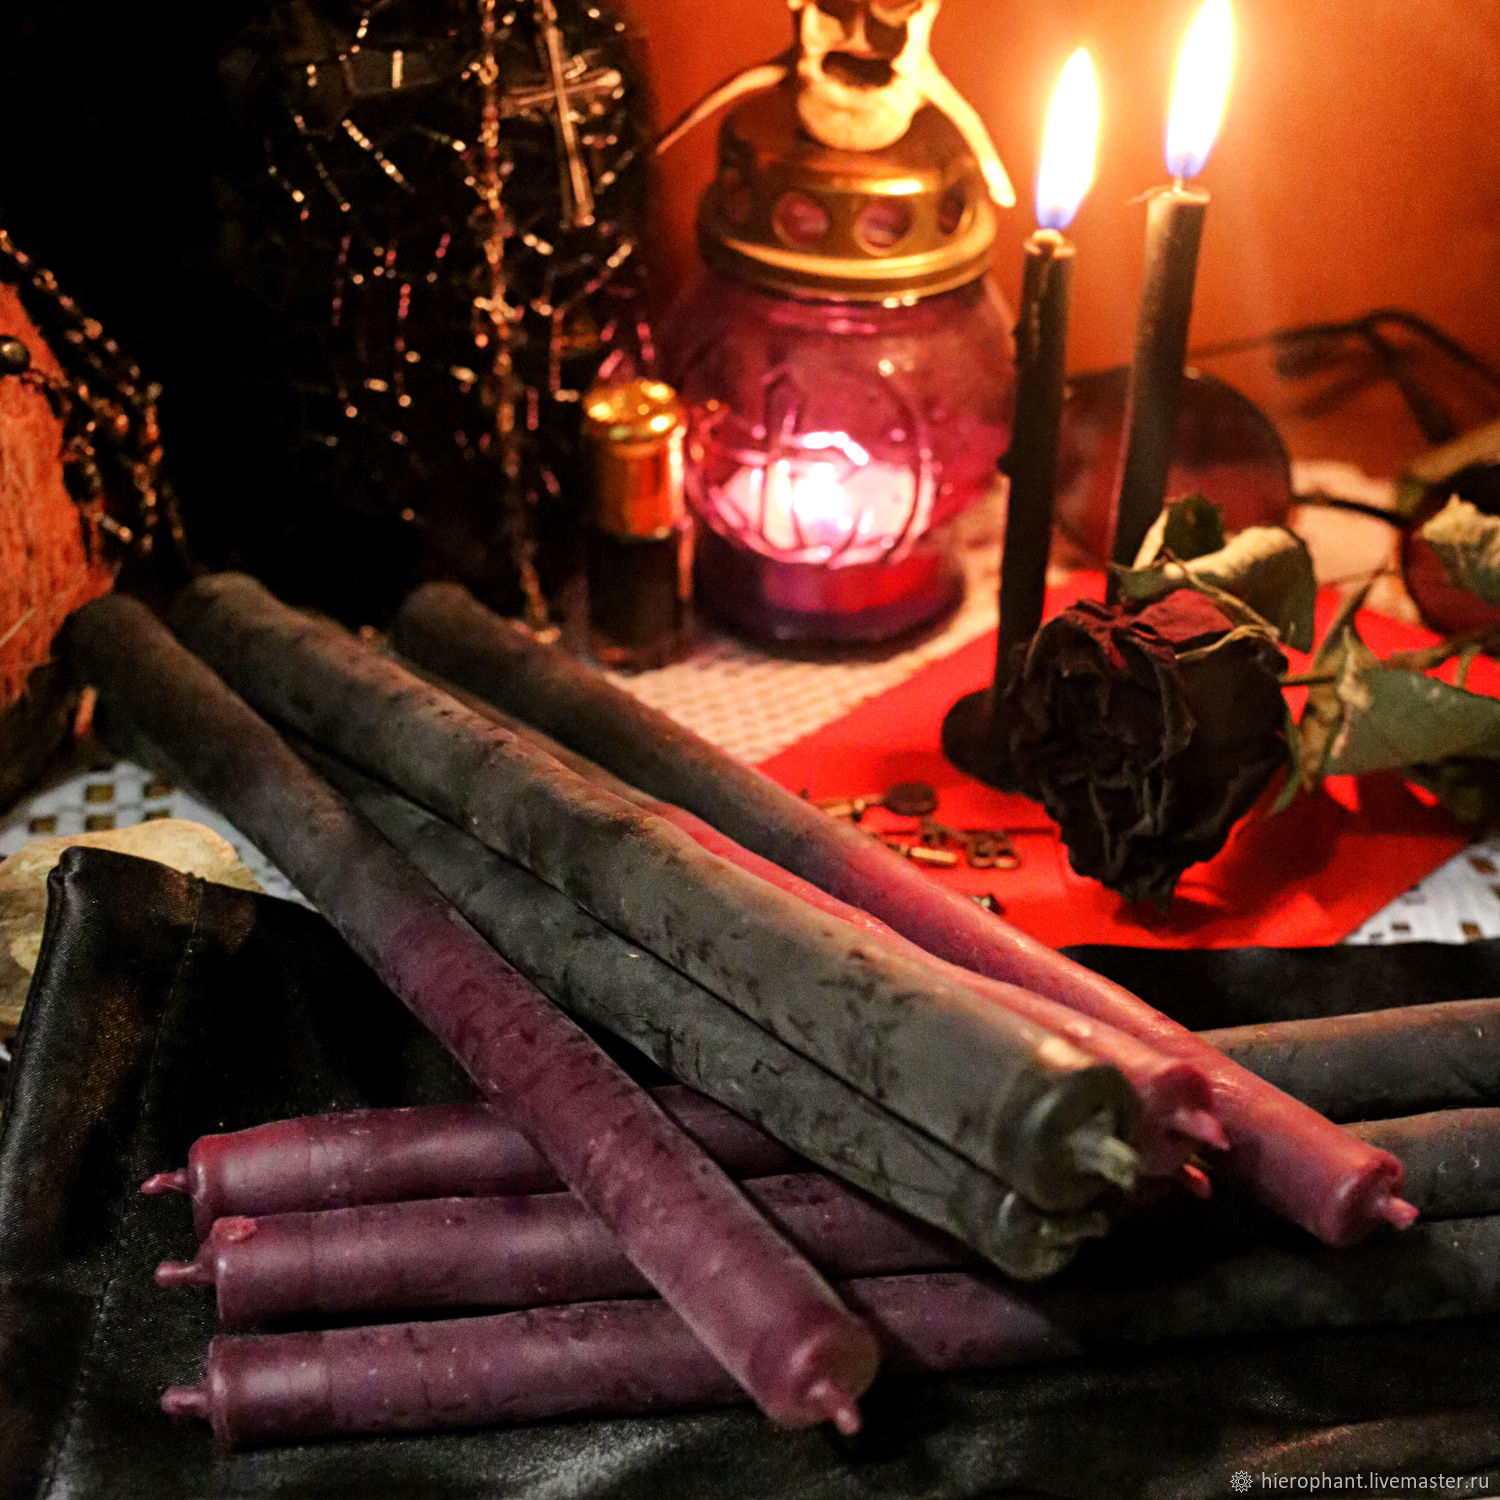 Ритуальная свеча фото